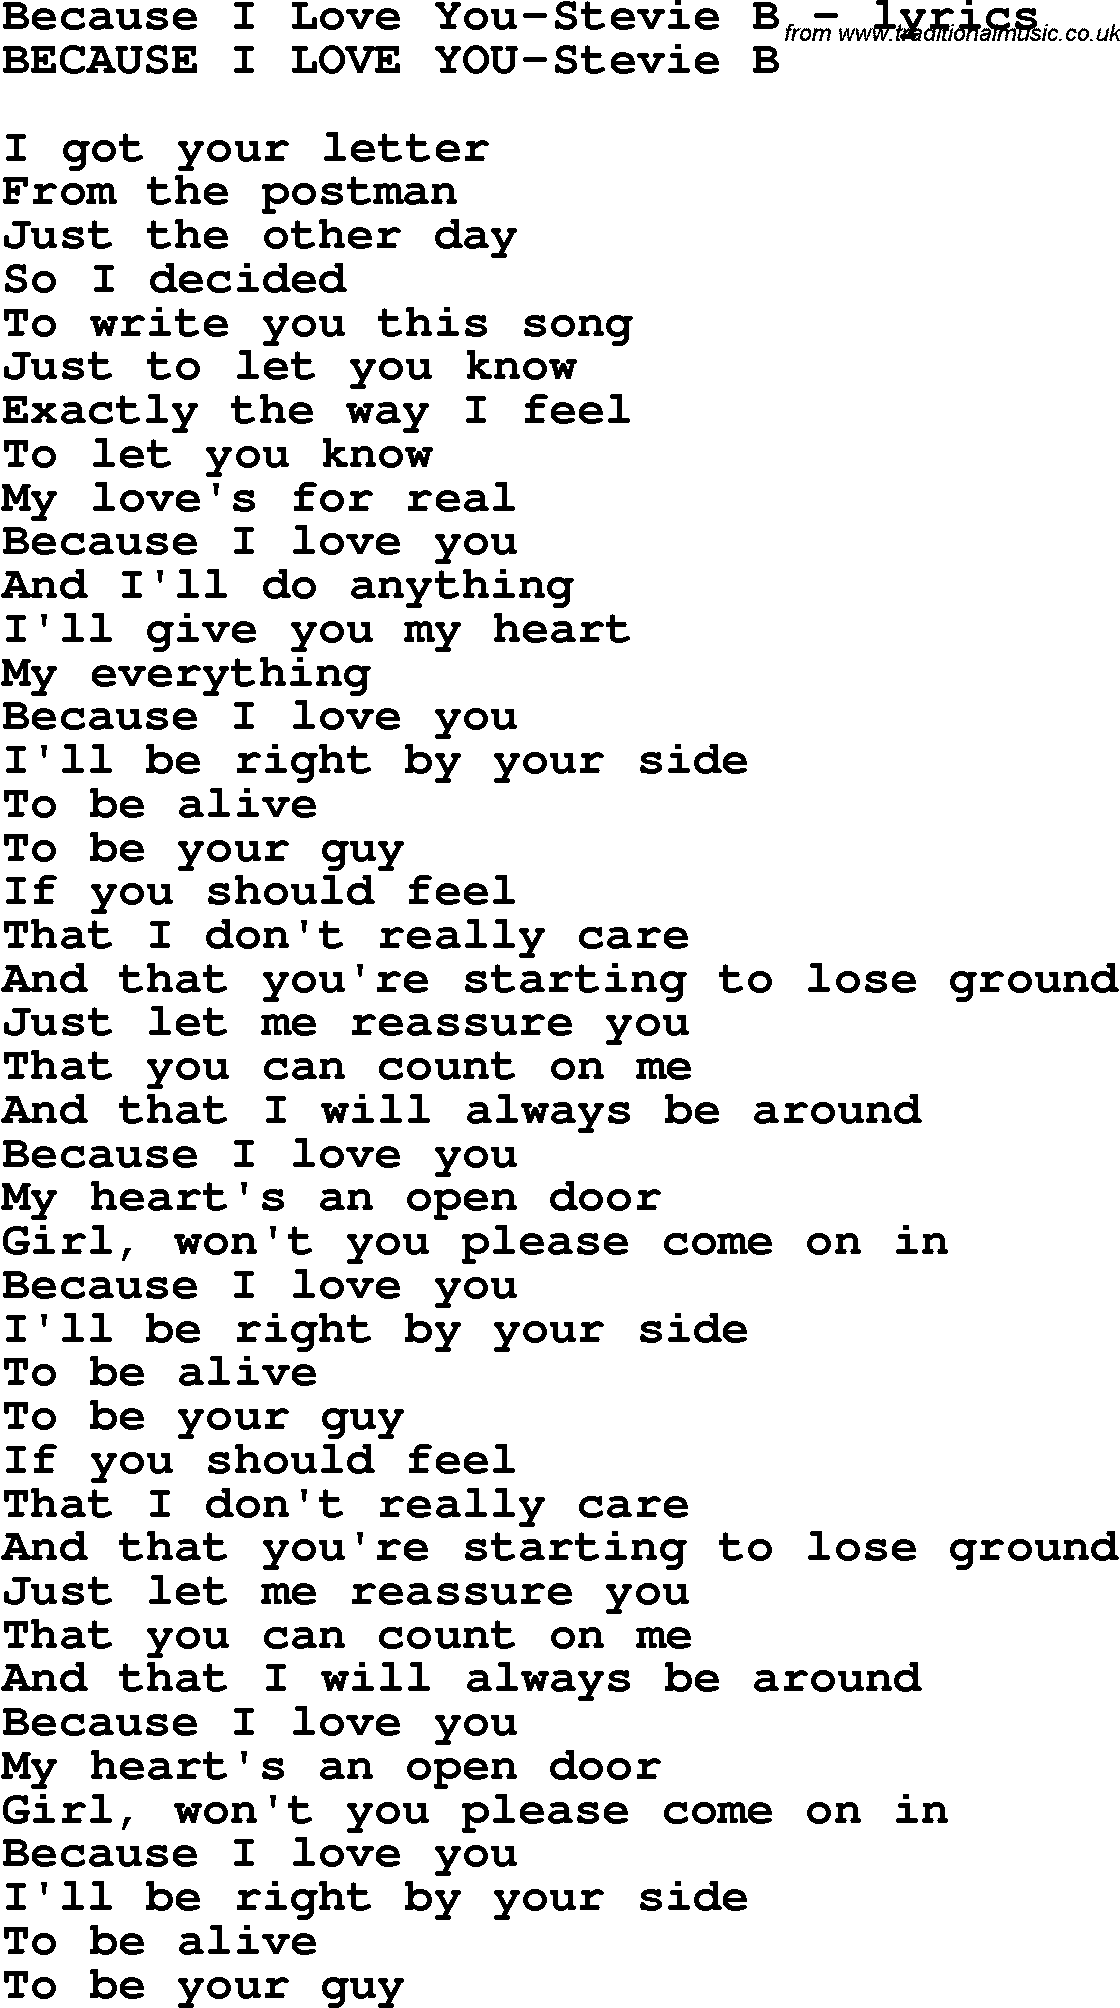 Love Song Lyrics for: Because I Love You-Stevie B